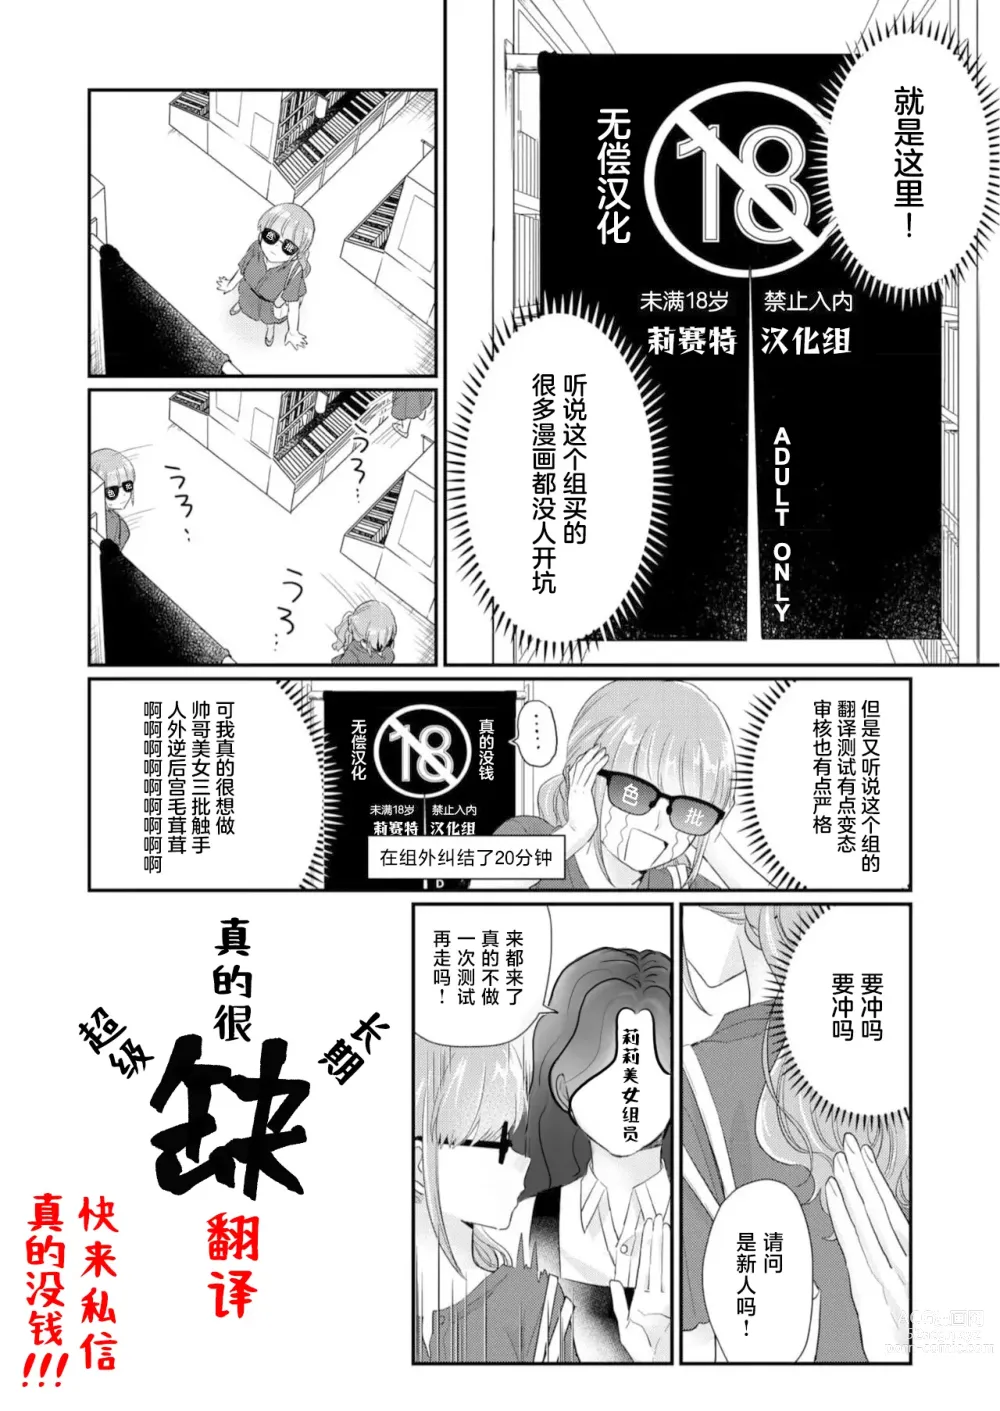 Page 32 of manga 请把衣服穿整齐了！